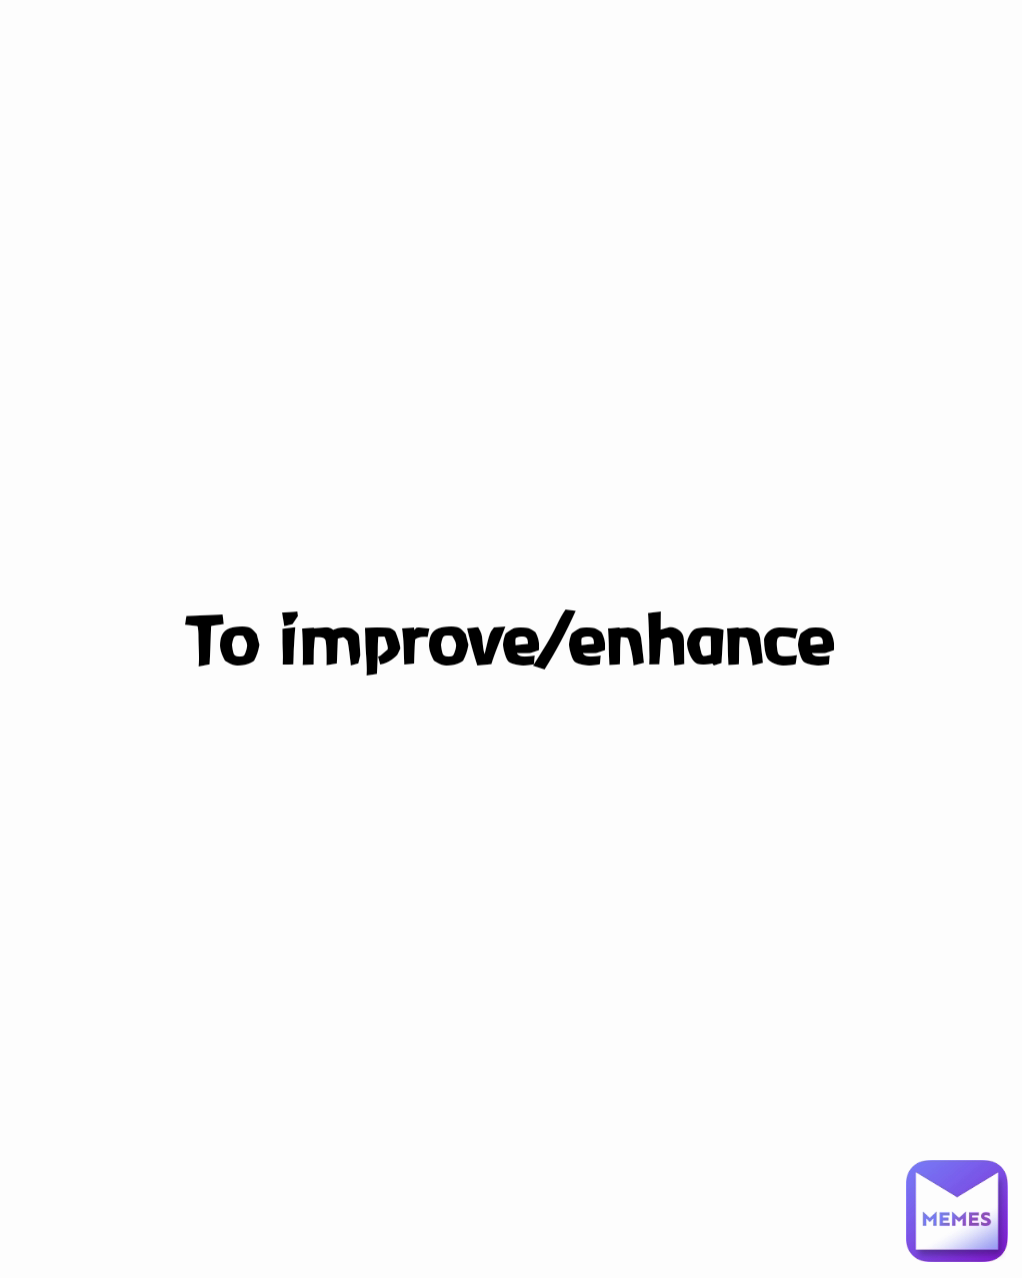 To improve/enhance